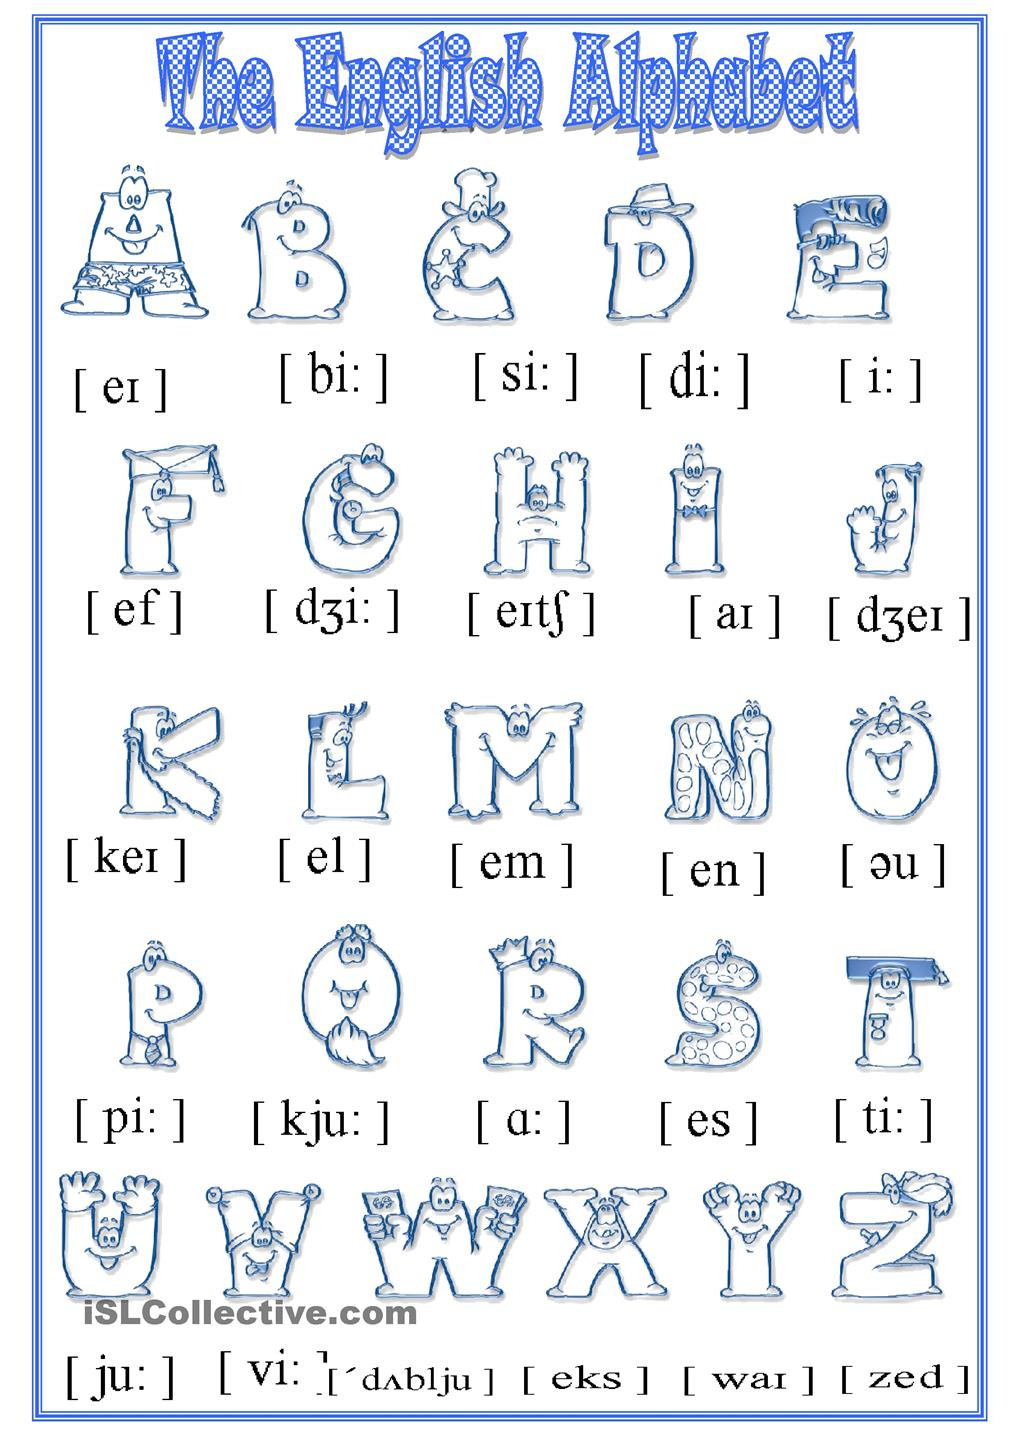 Spanish Alphabet Worksheets Db excel